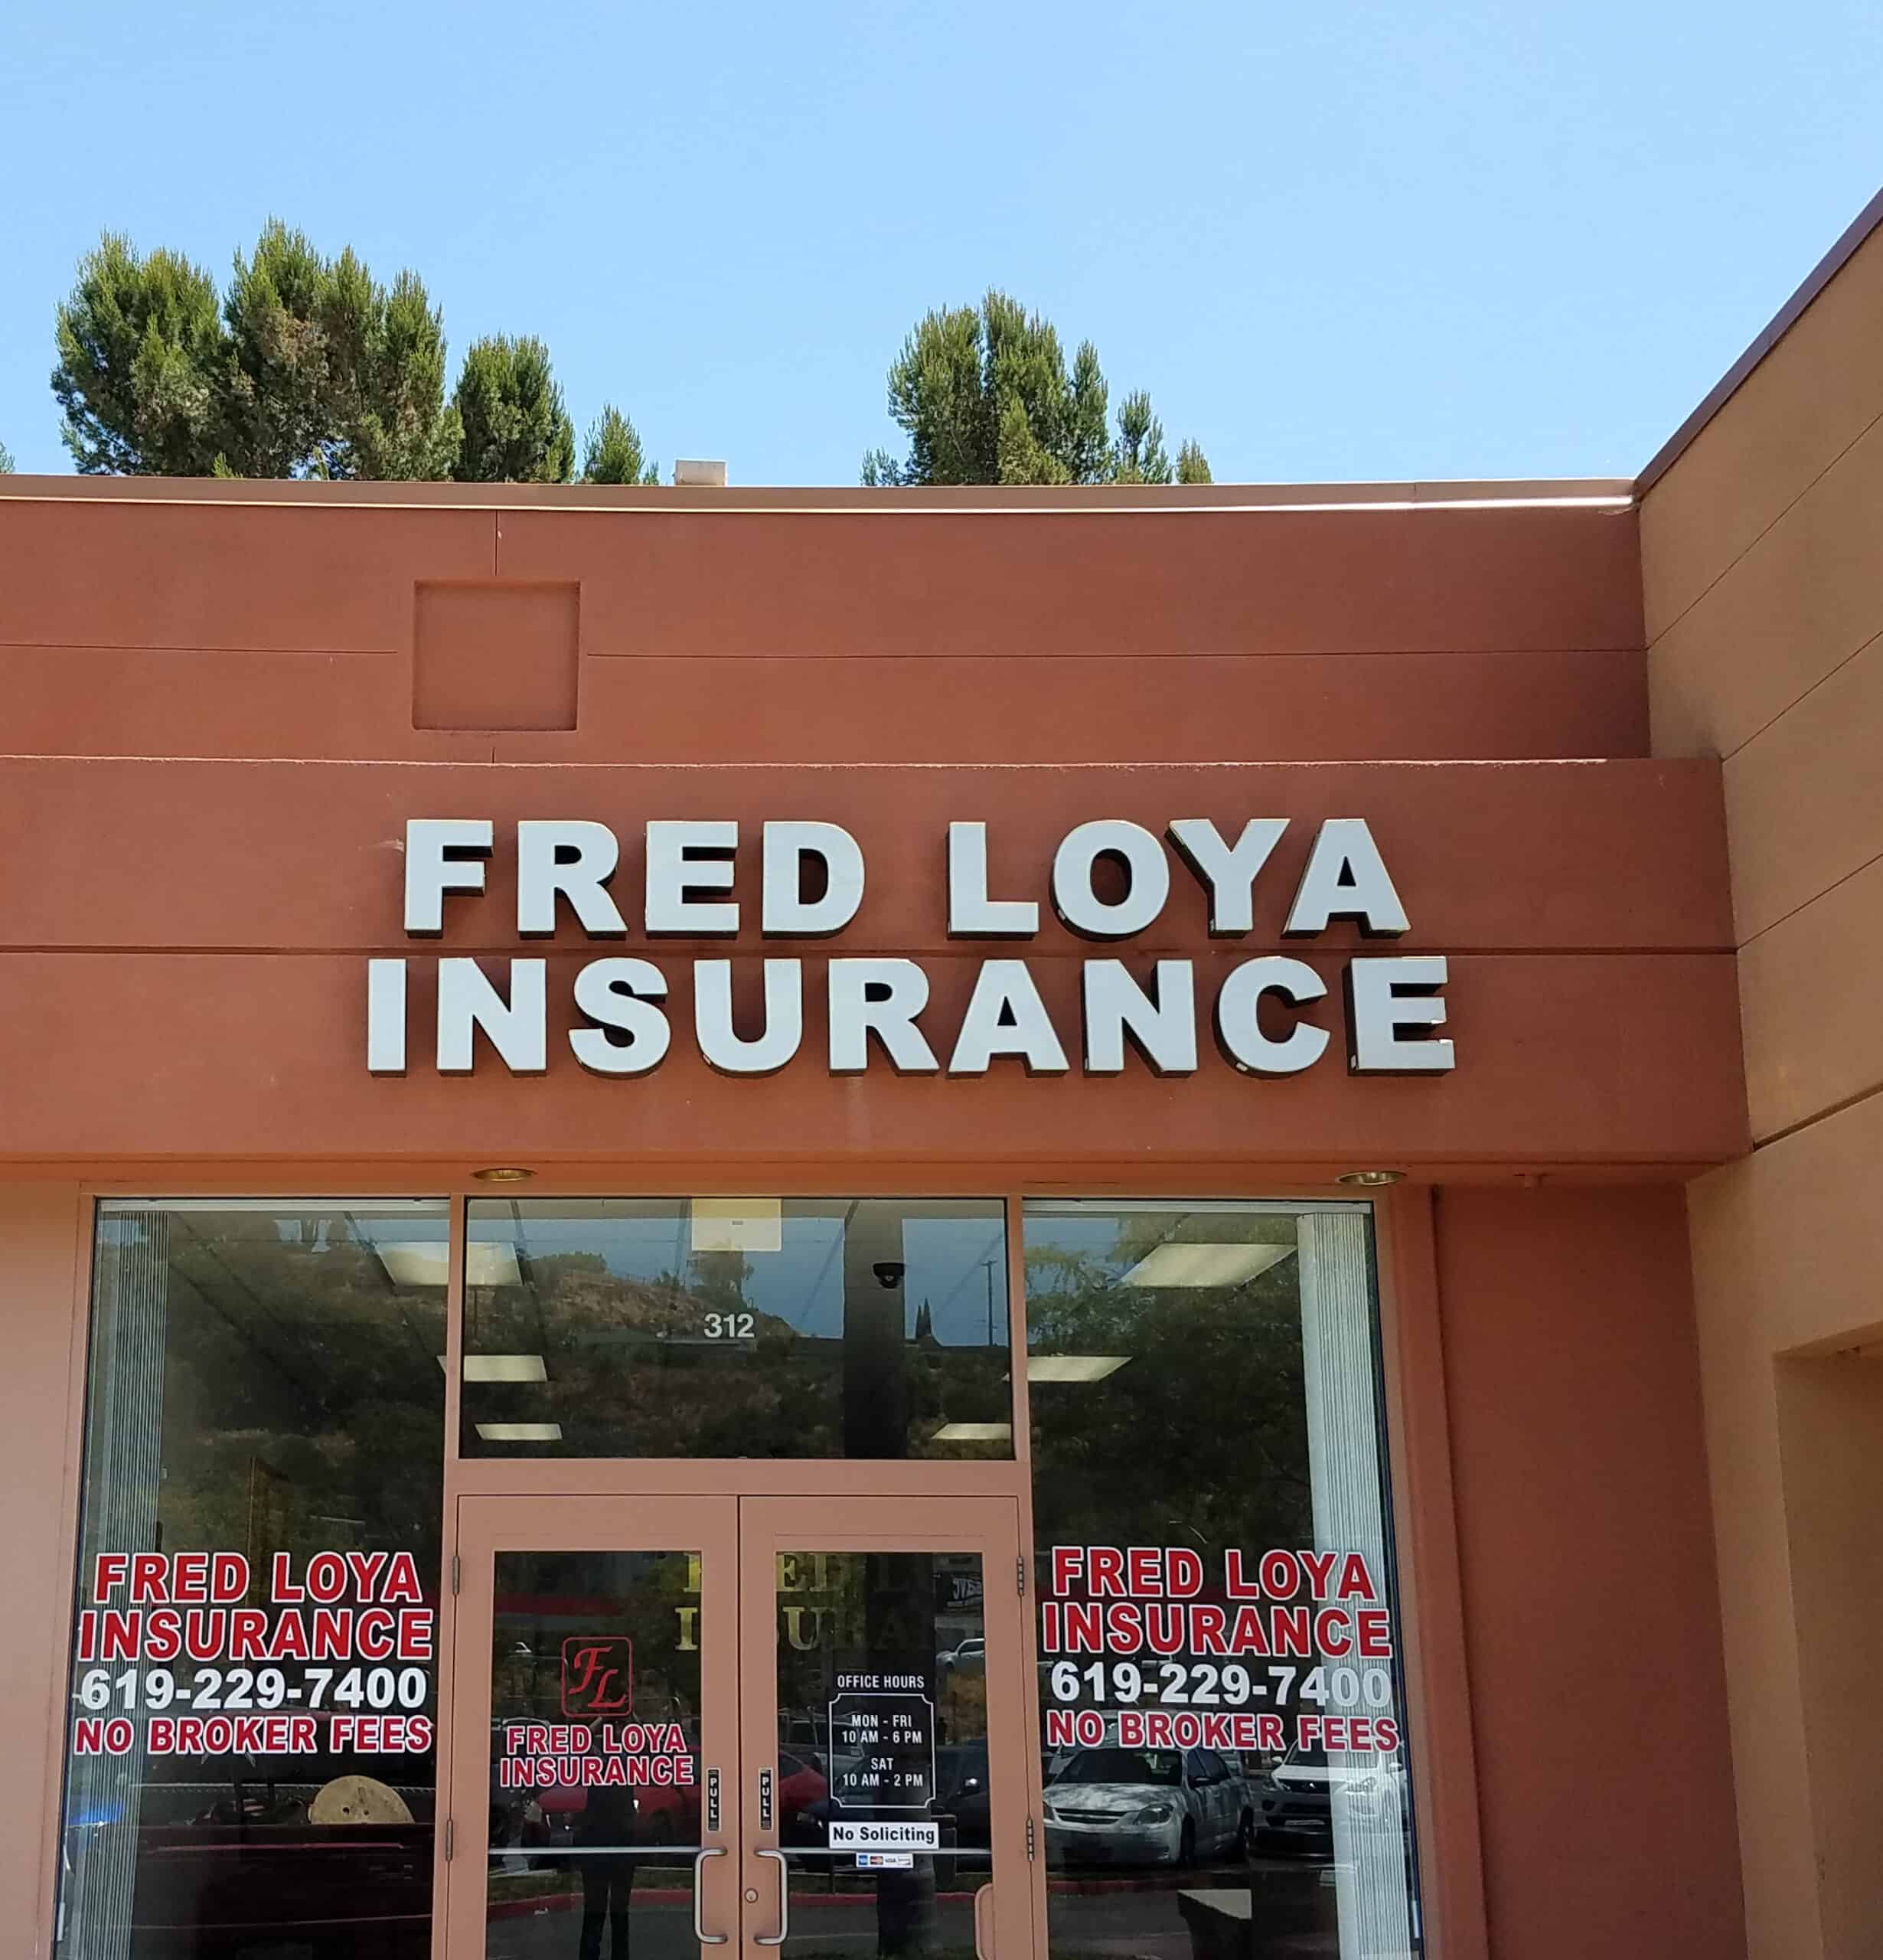 Fred Loya Insurance - University Square